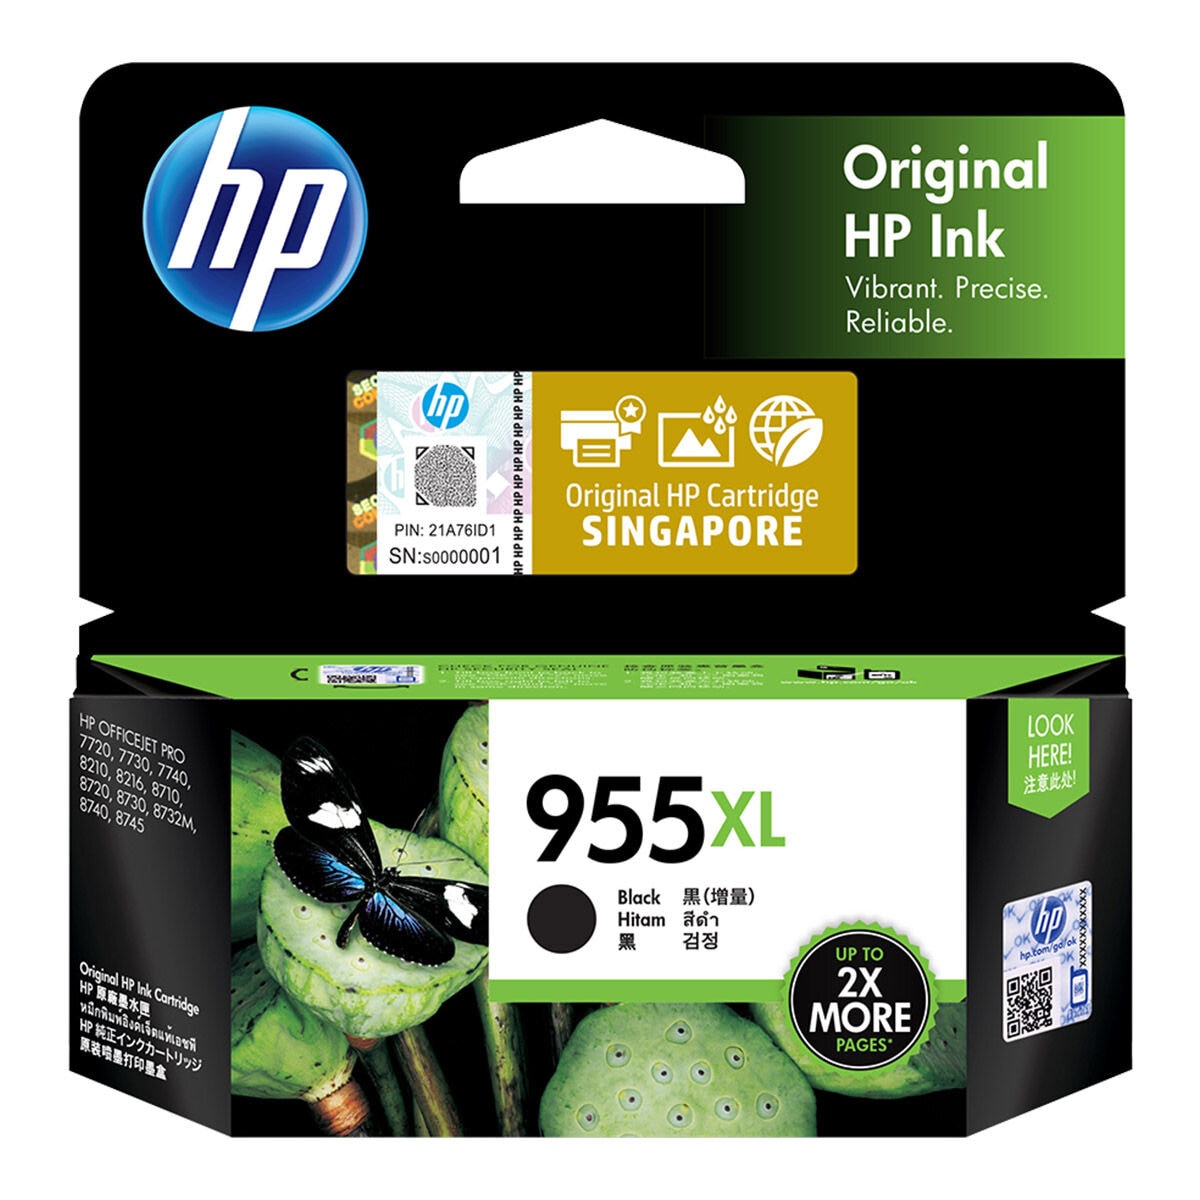 HP 955XL 墨水組合 - 黑 X 1 + 彩色組 X 1